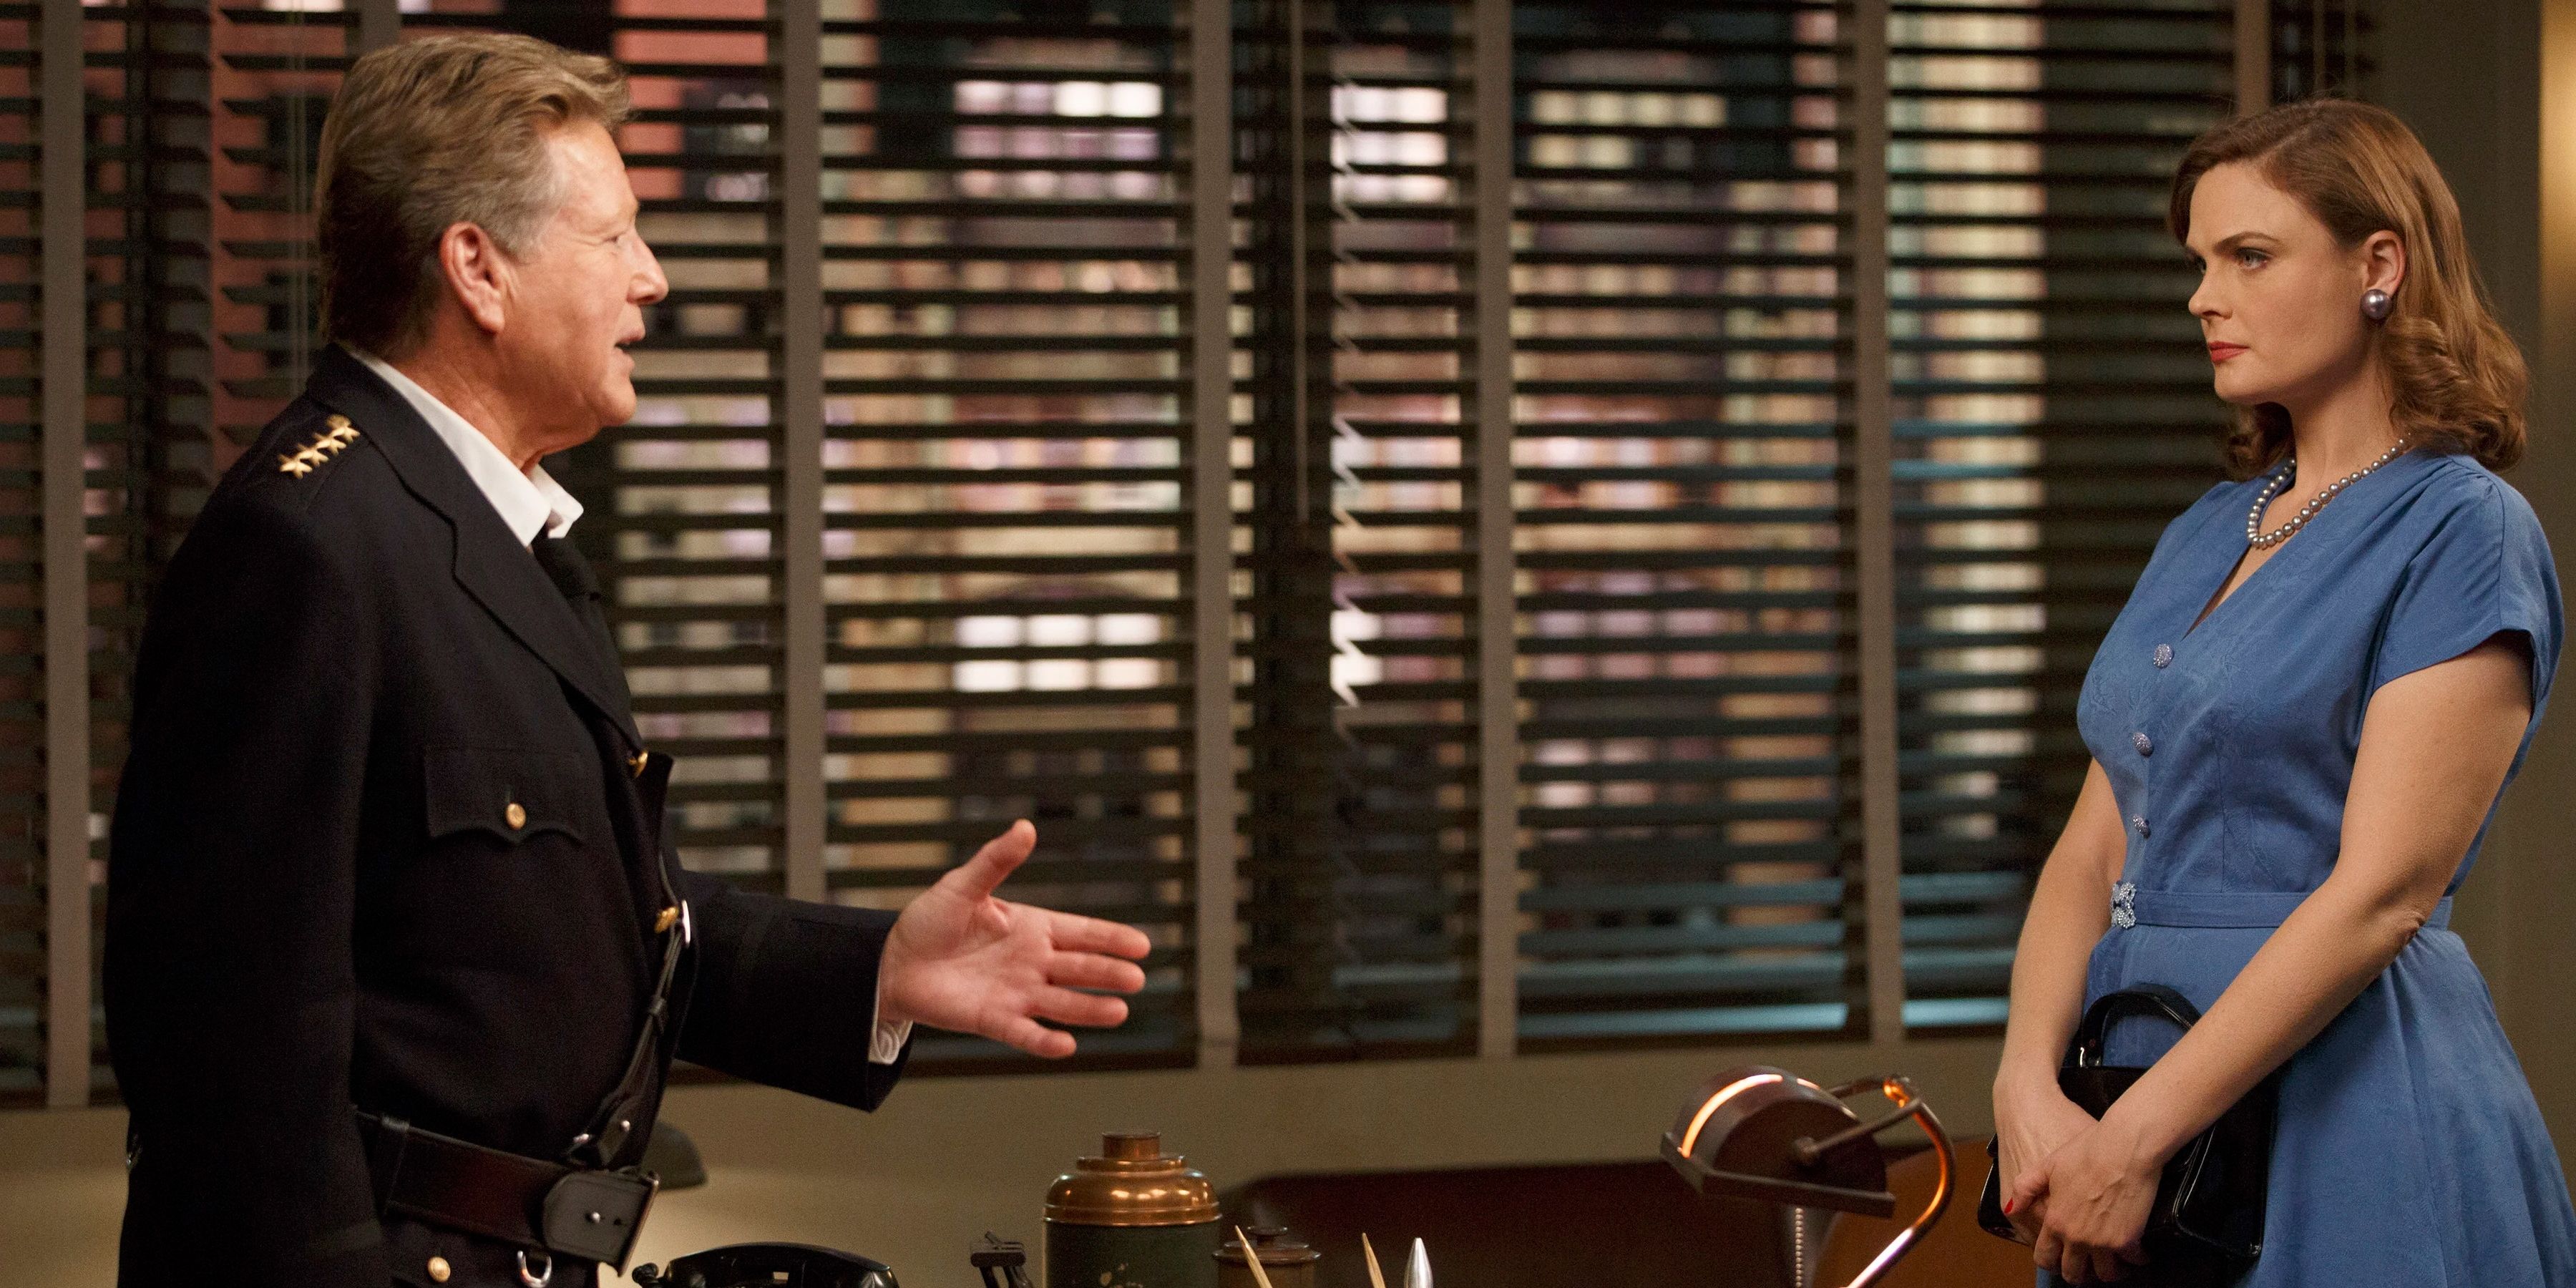 Ryan O'Neal as Max Keenan reaching out to shake Temperance Brennan's (Emily Deschanel) hand in Bones